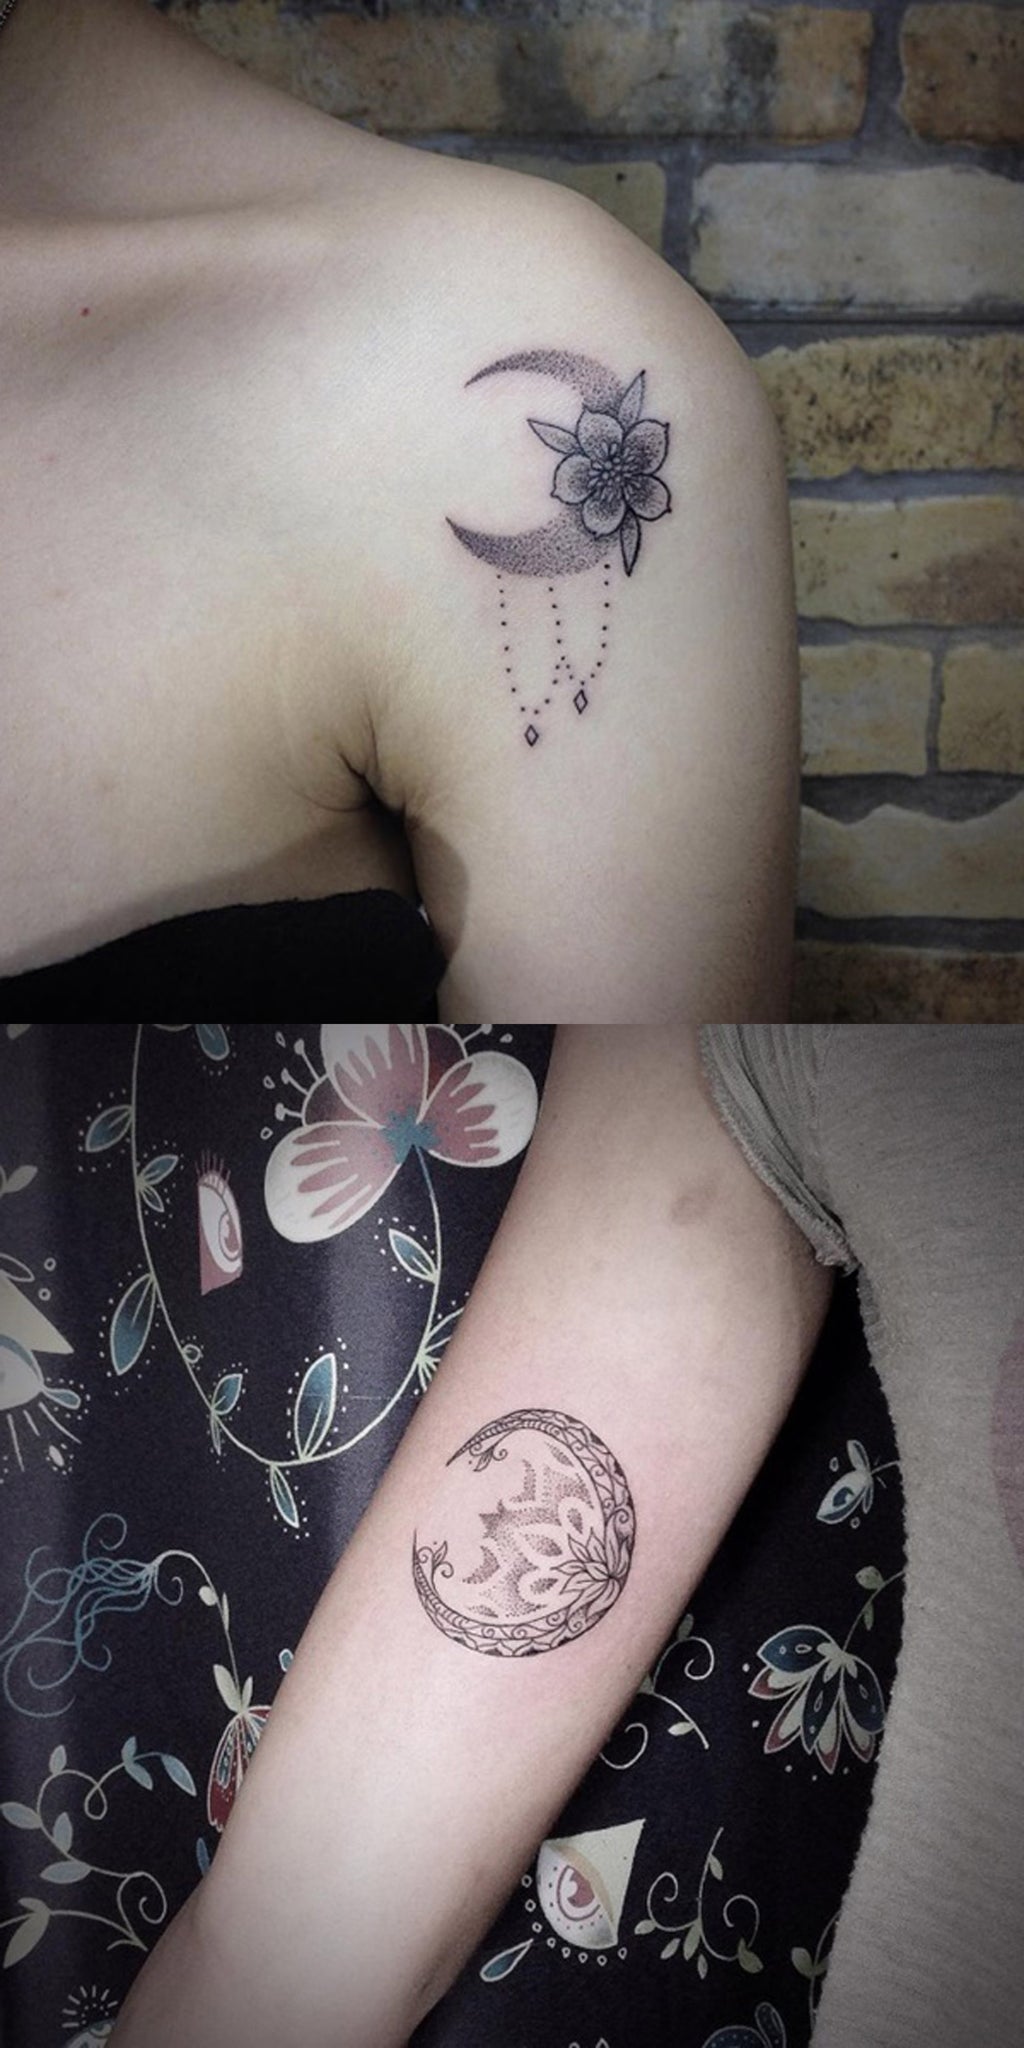 Traditional Crescent Moon Chandelier Tattoo Ideas for Women - Delicate Floral Mandala Forearm Tat -  ideas delicadas del tatuaje del antebrazo de la luna para las mujeres - www.MyBodiArt.com